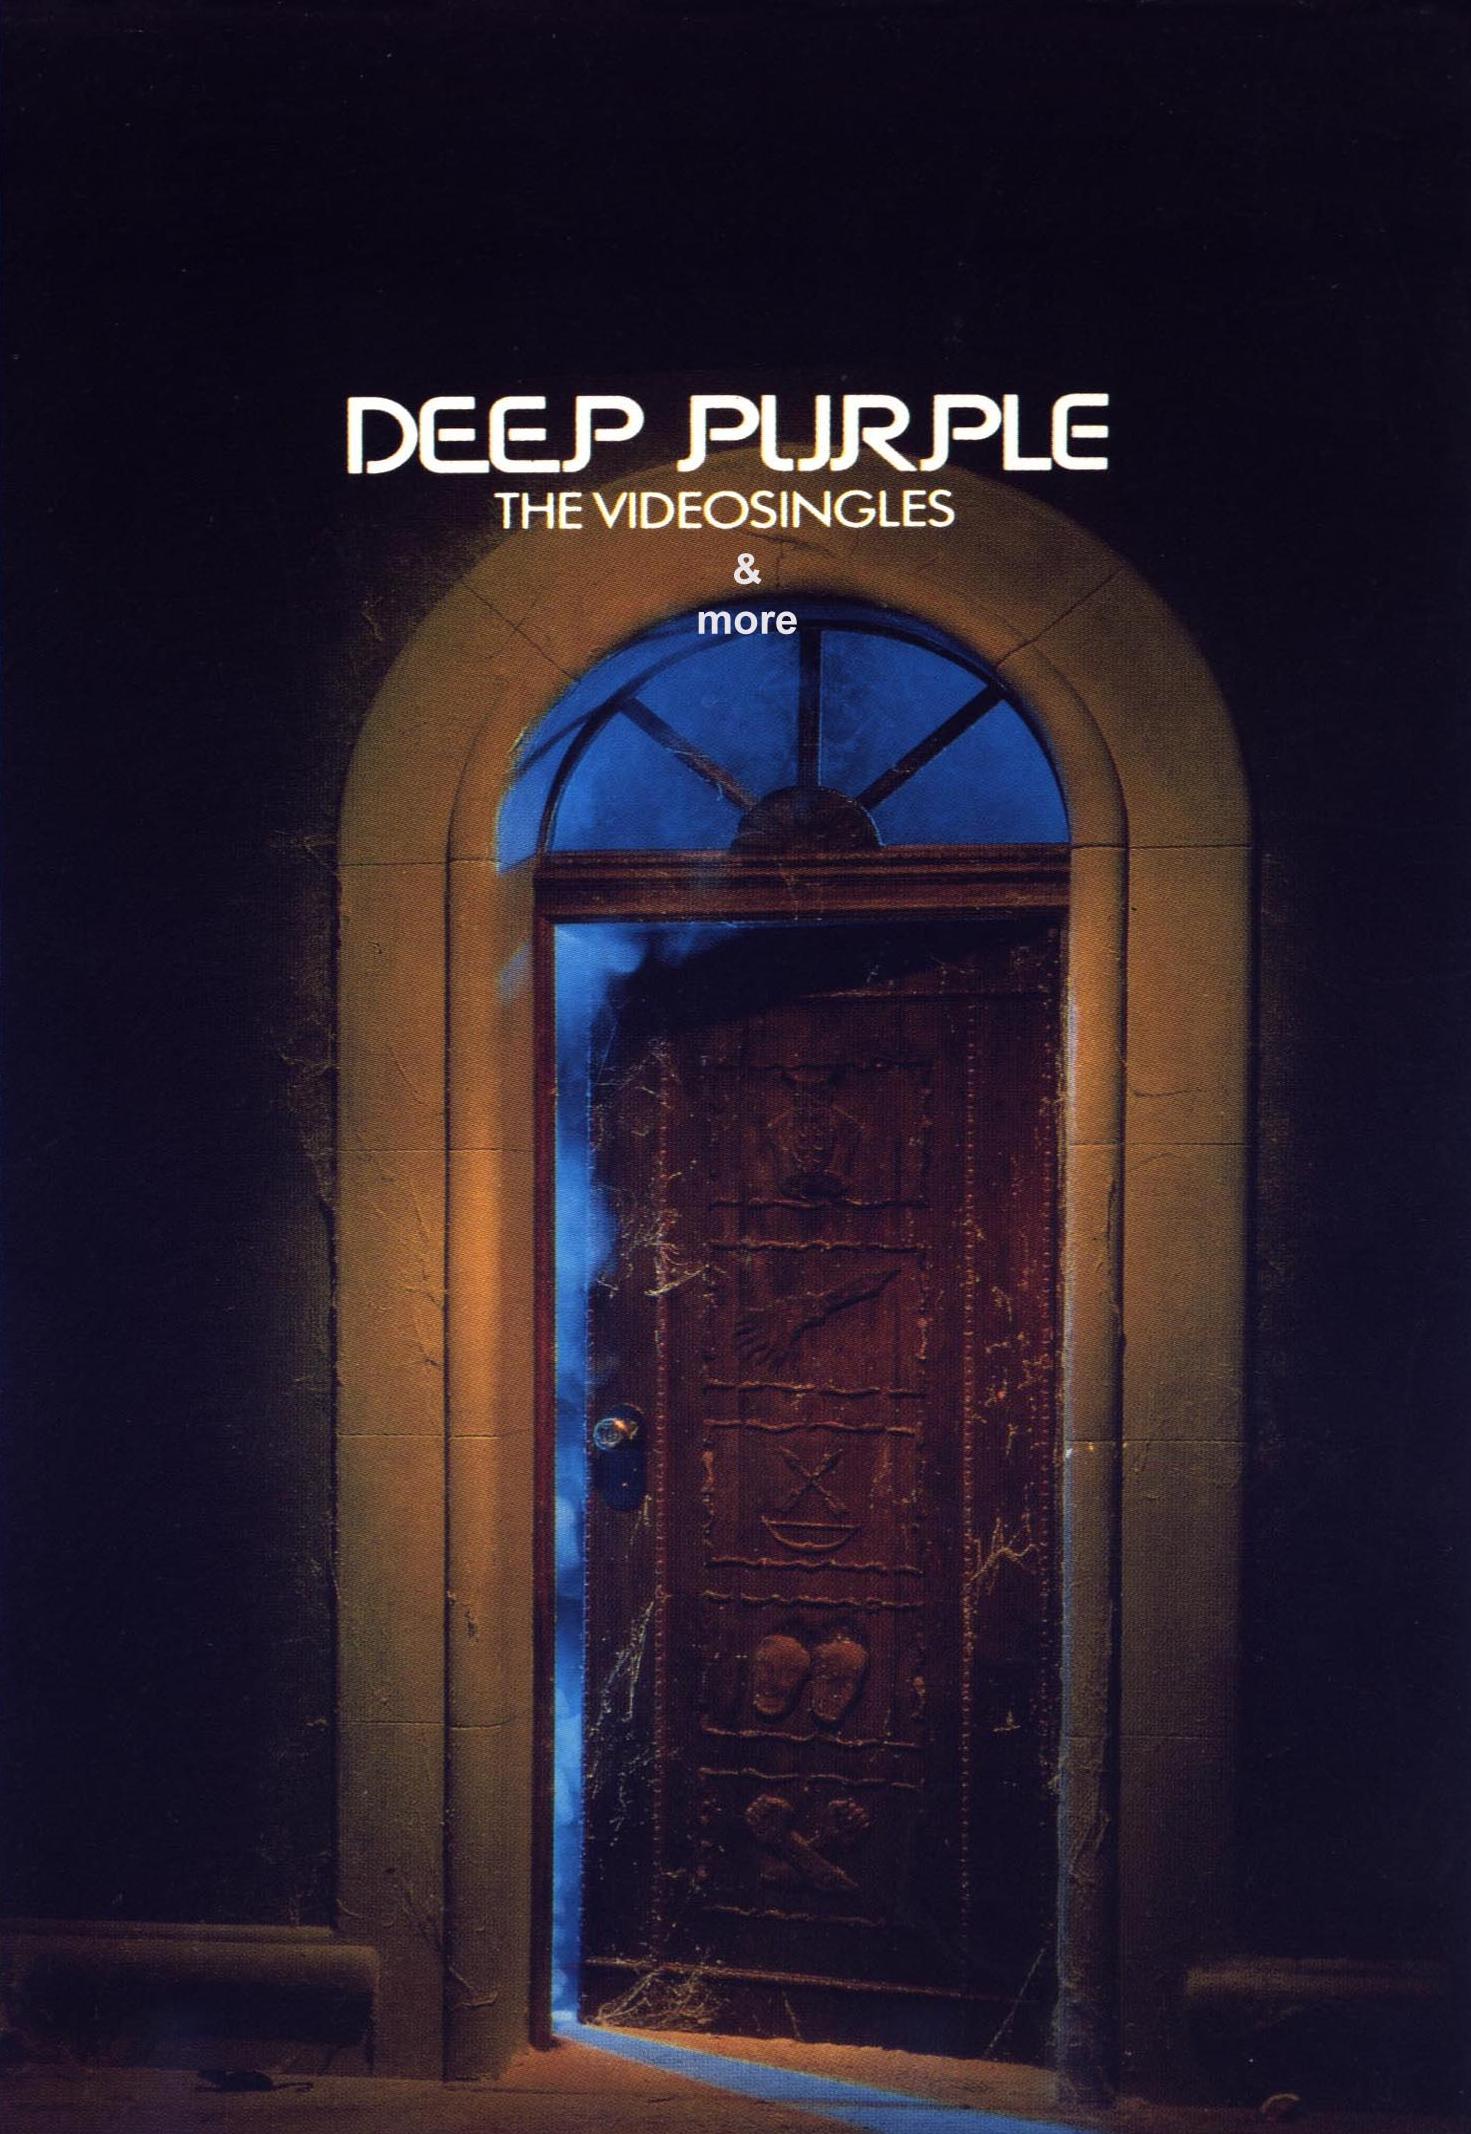 DEEP PURPLE - The Video Singles cover 